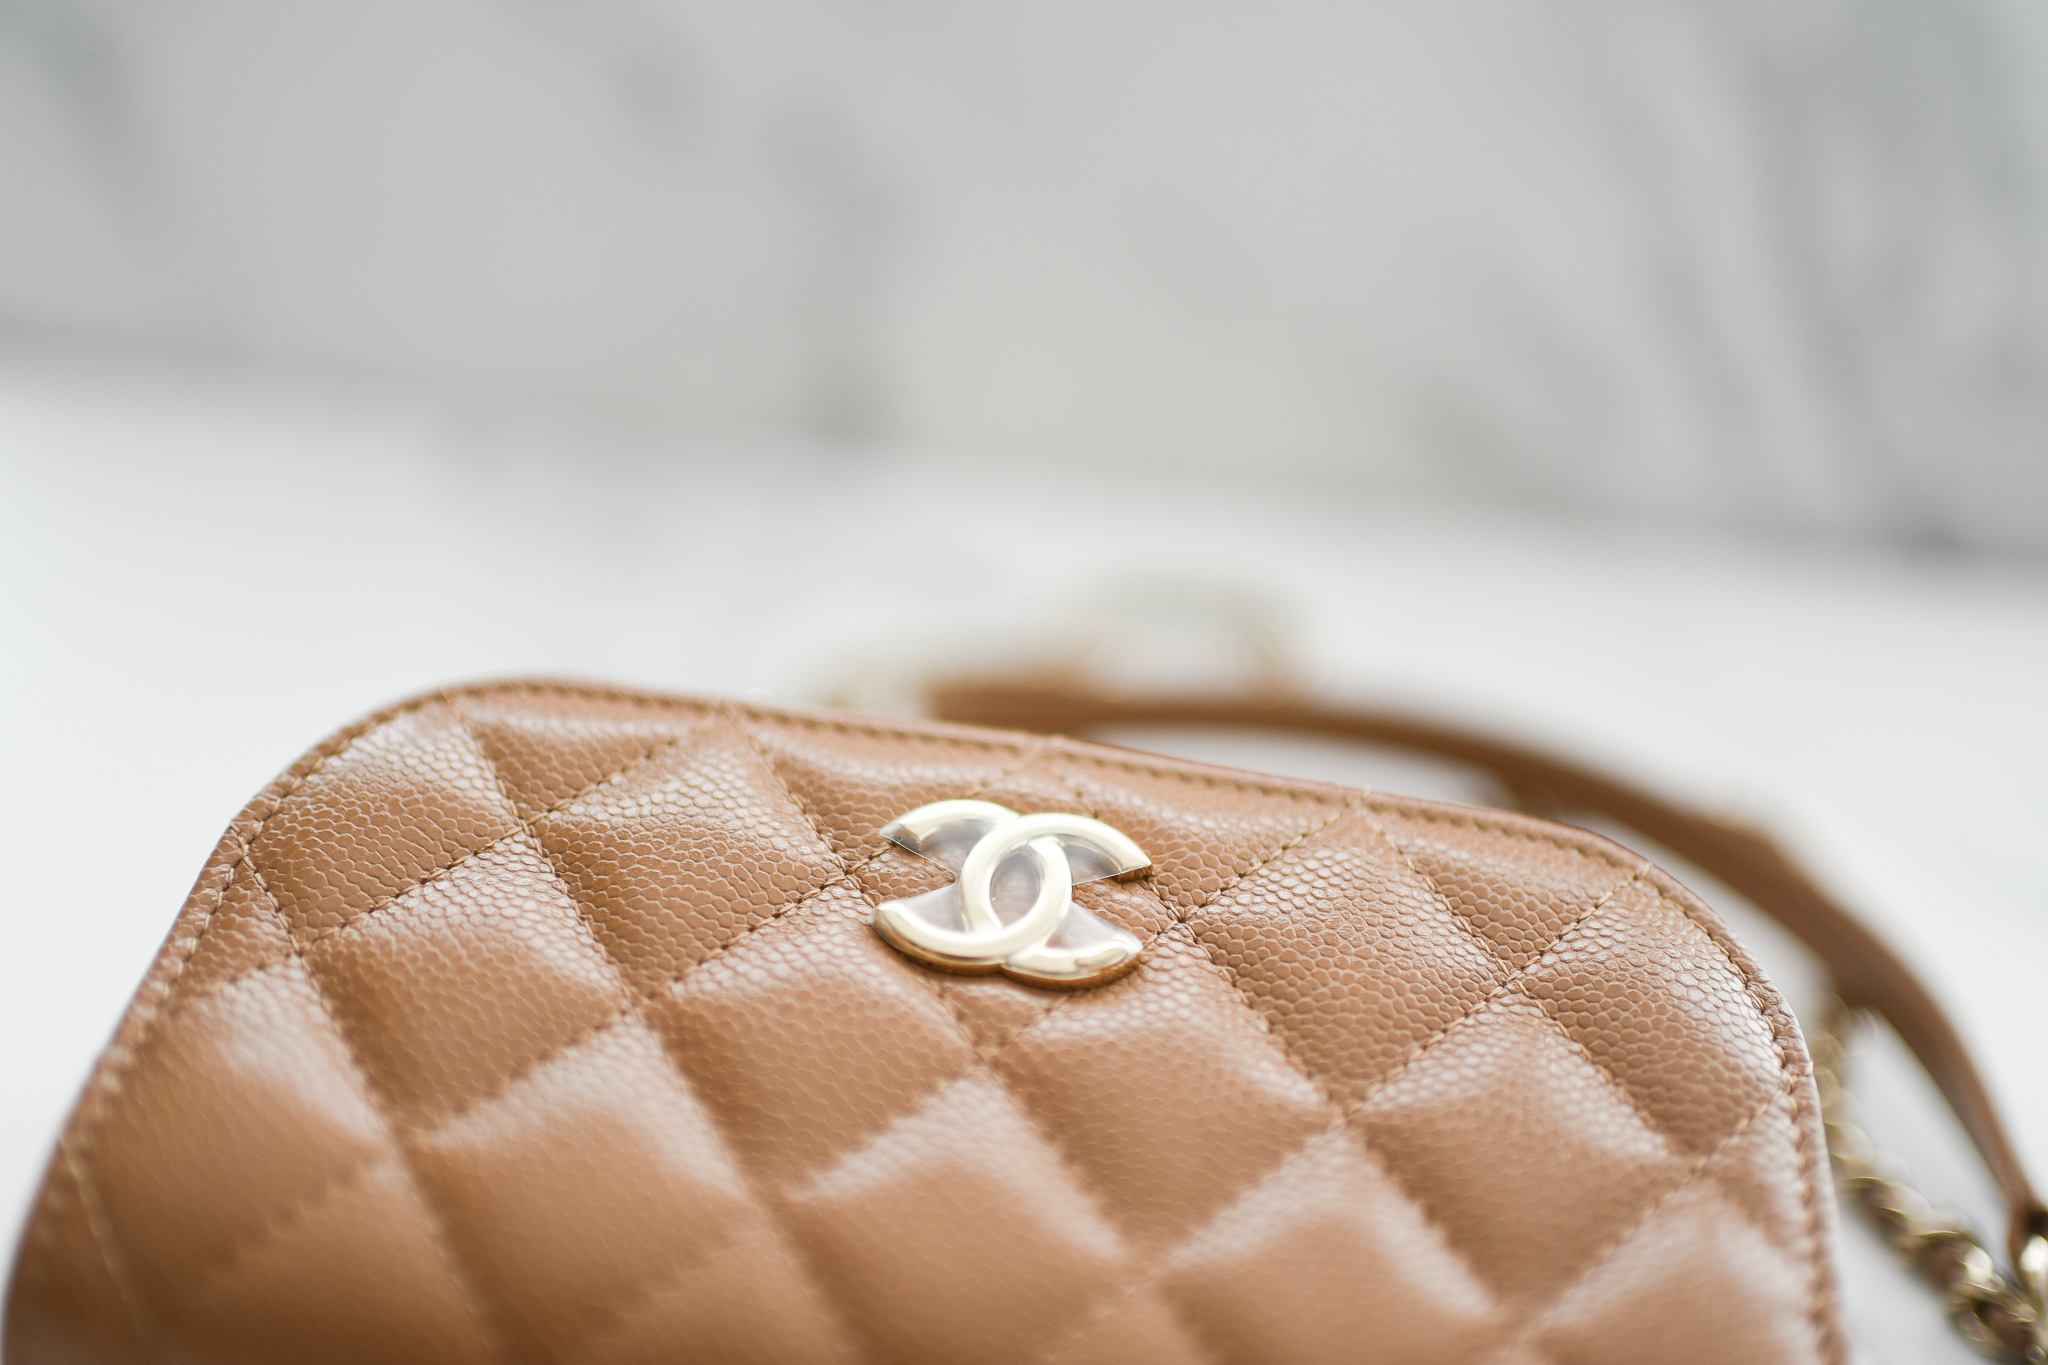 Della Marga - Gorgeous Chanel Business Affinity bag in beige